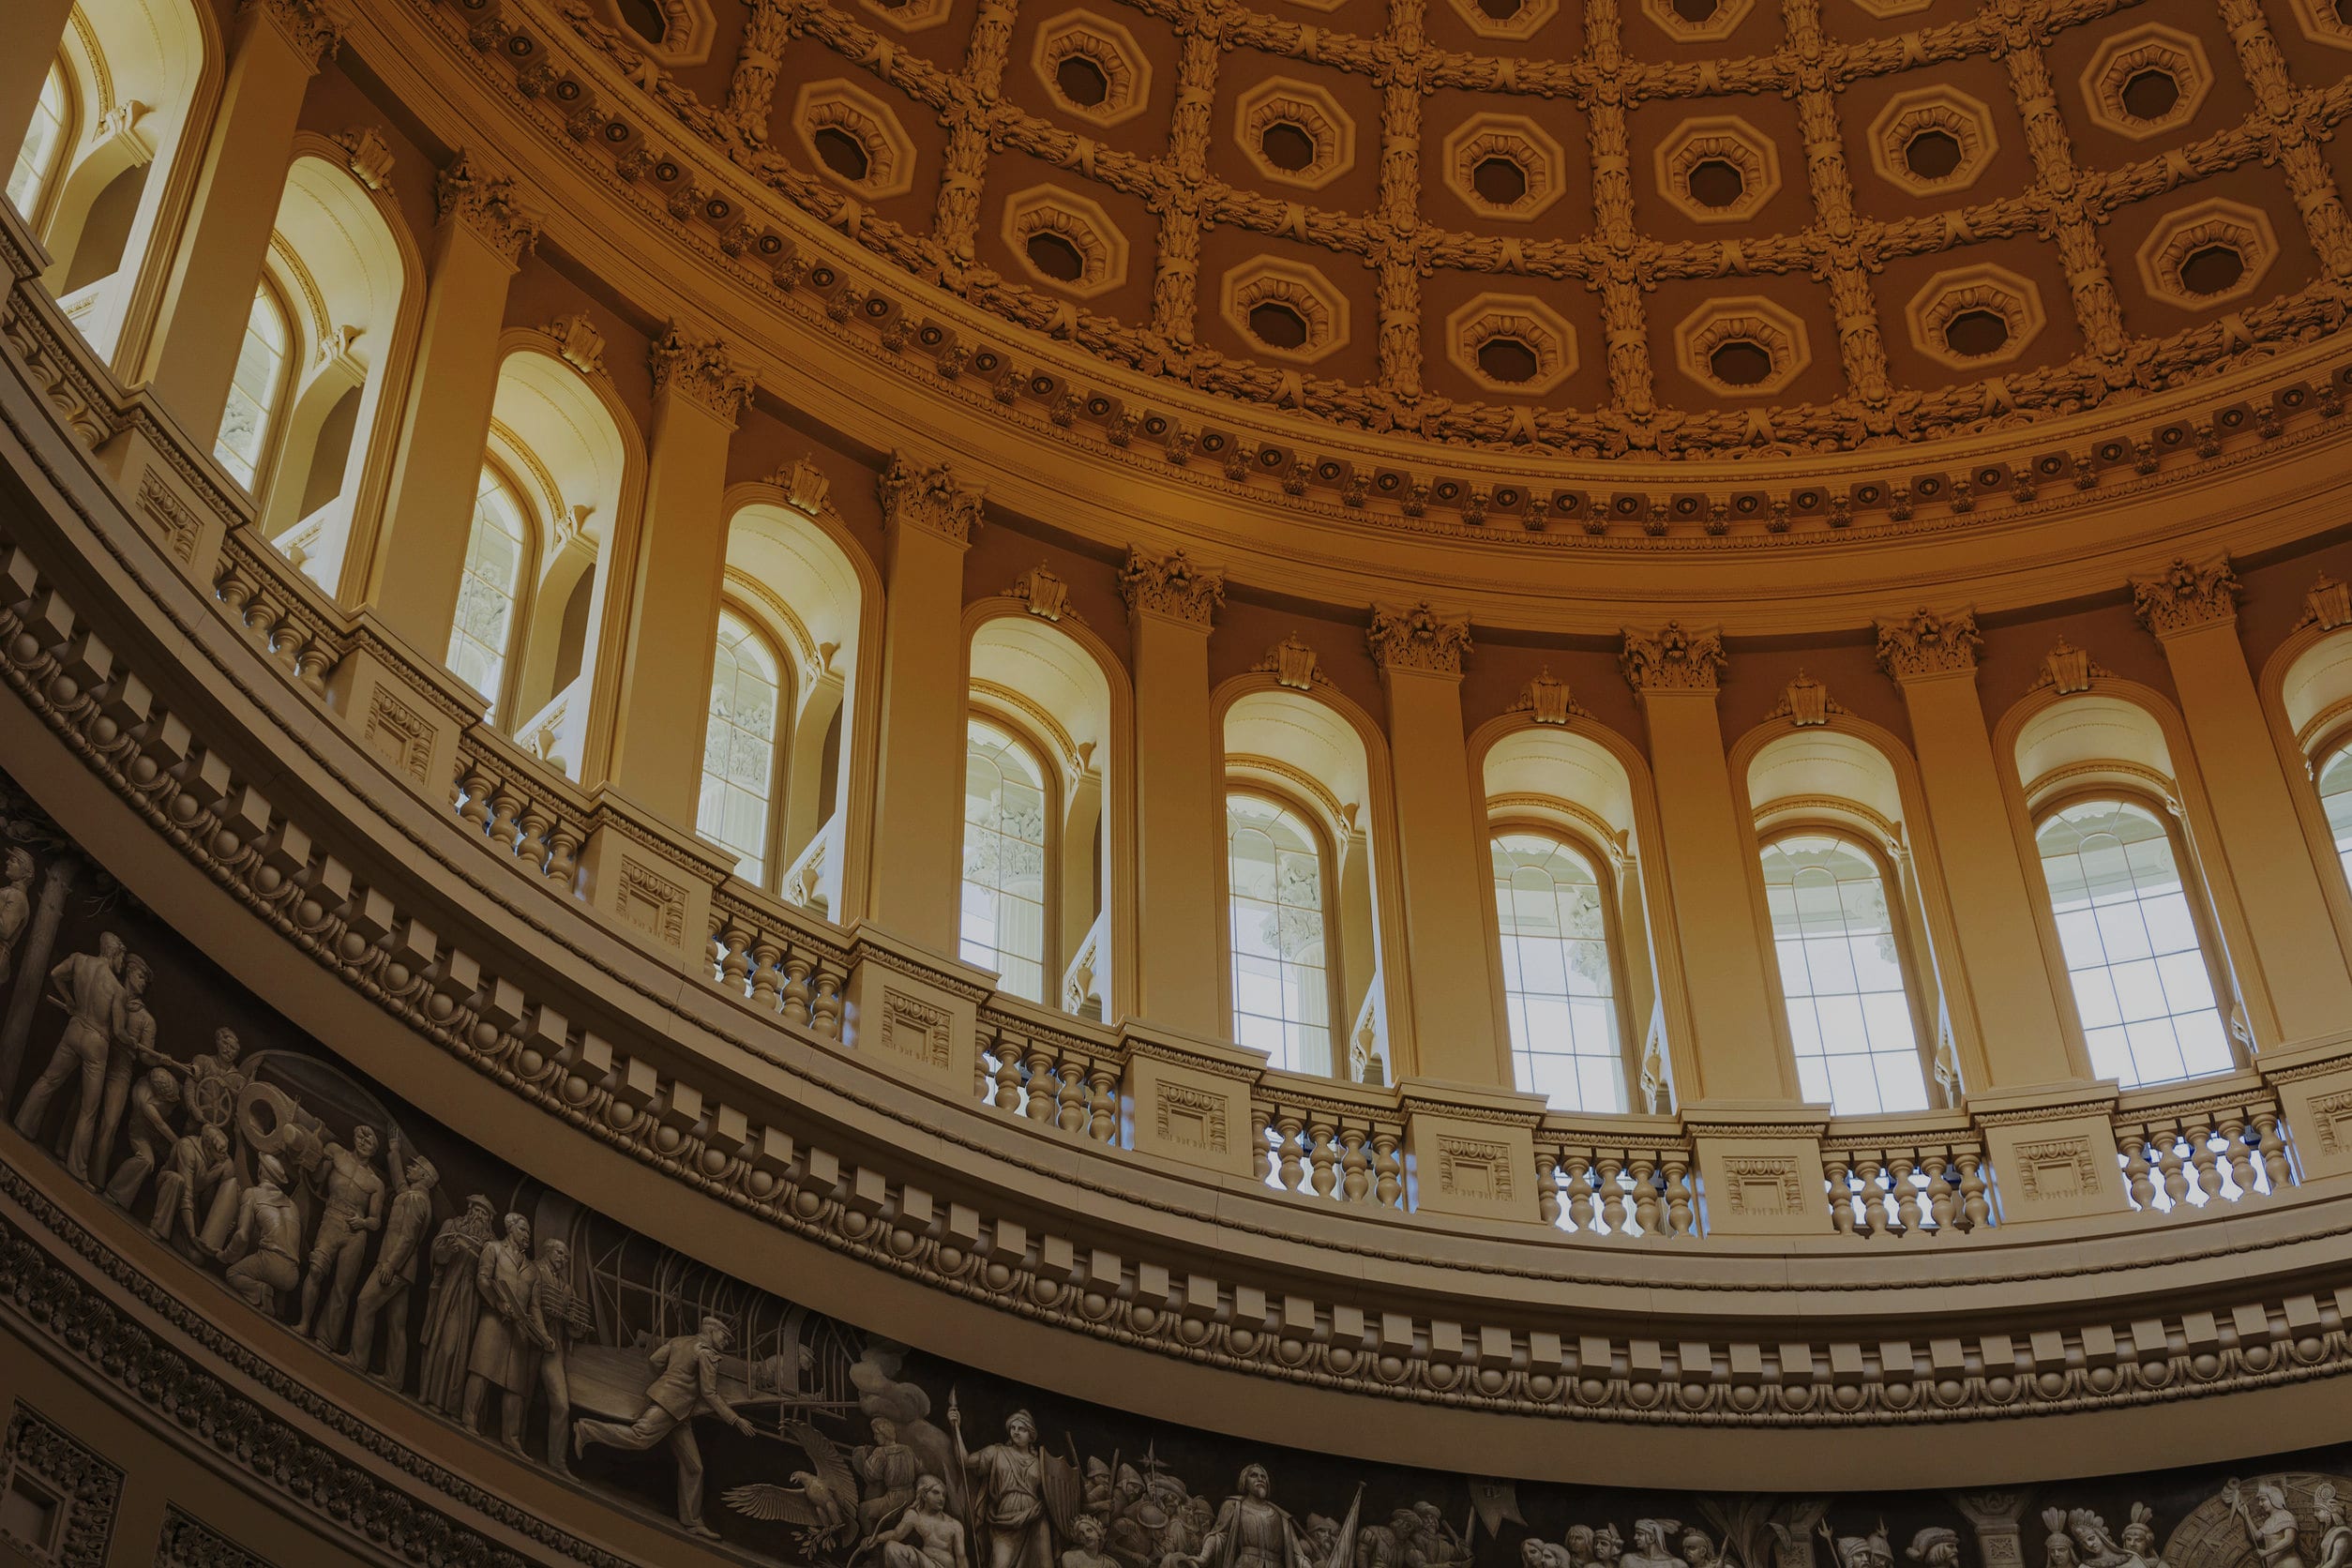 Washinton D.C., Interior of the Washington capitol hill dome Rotunda